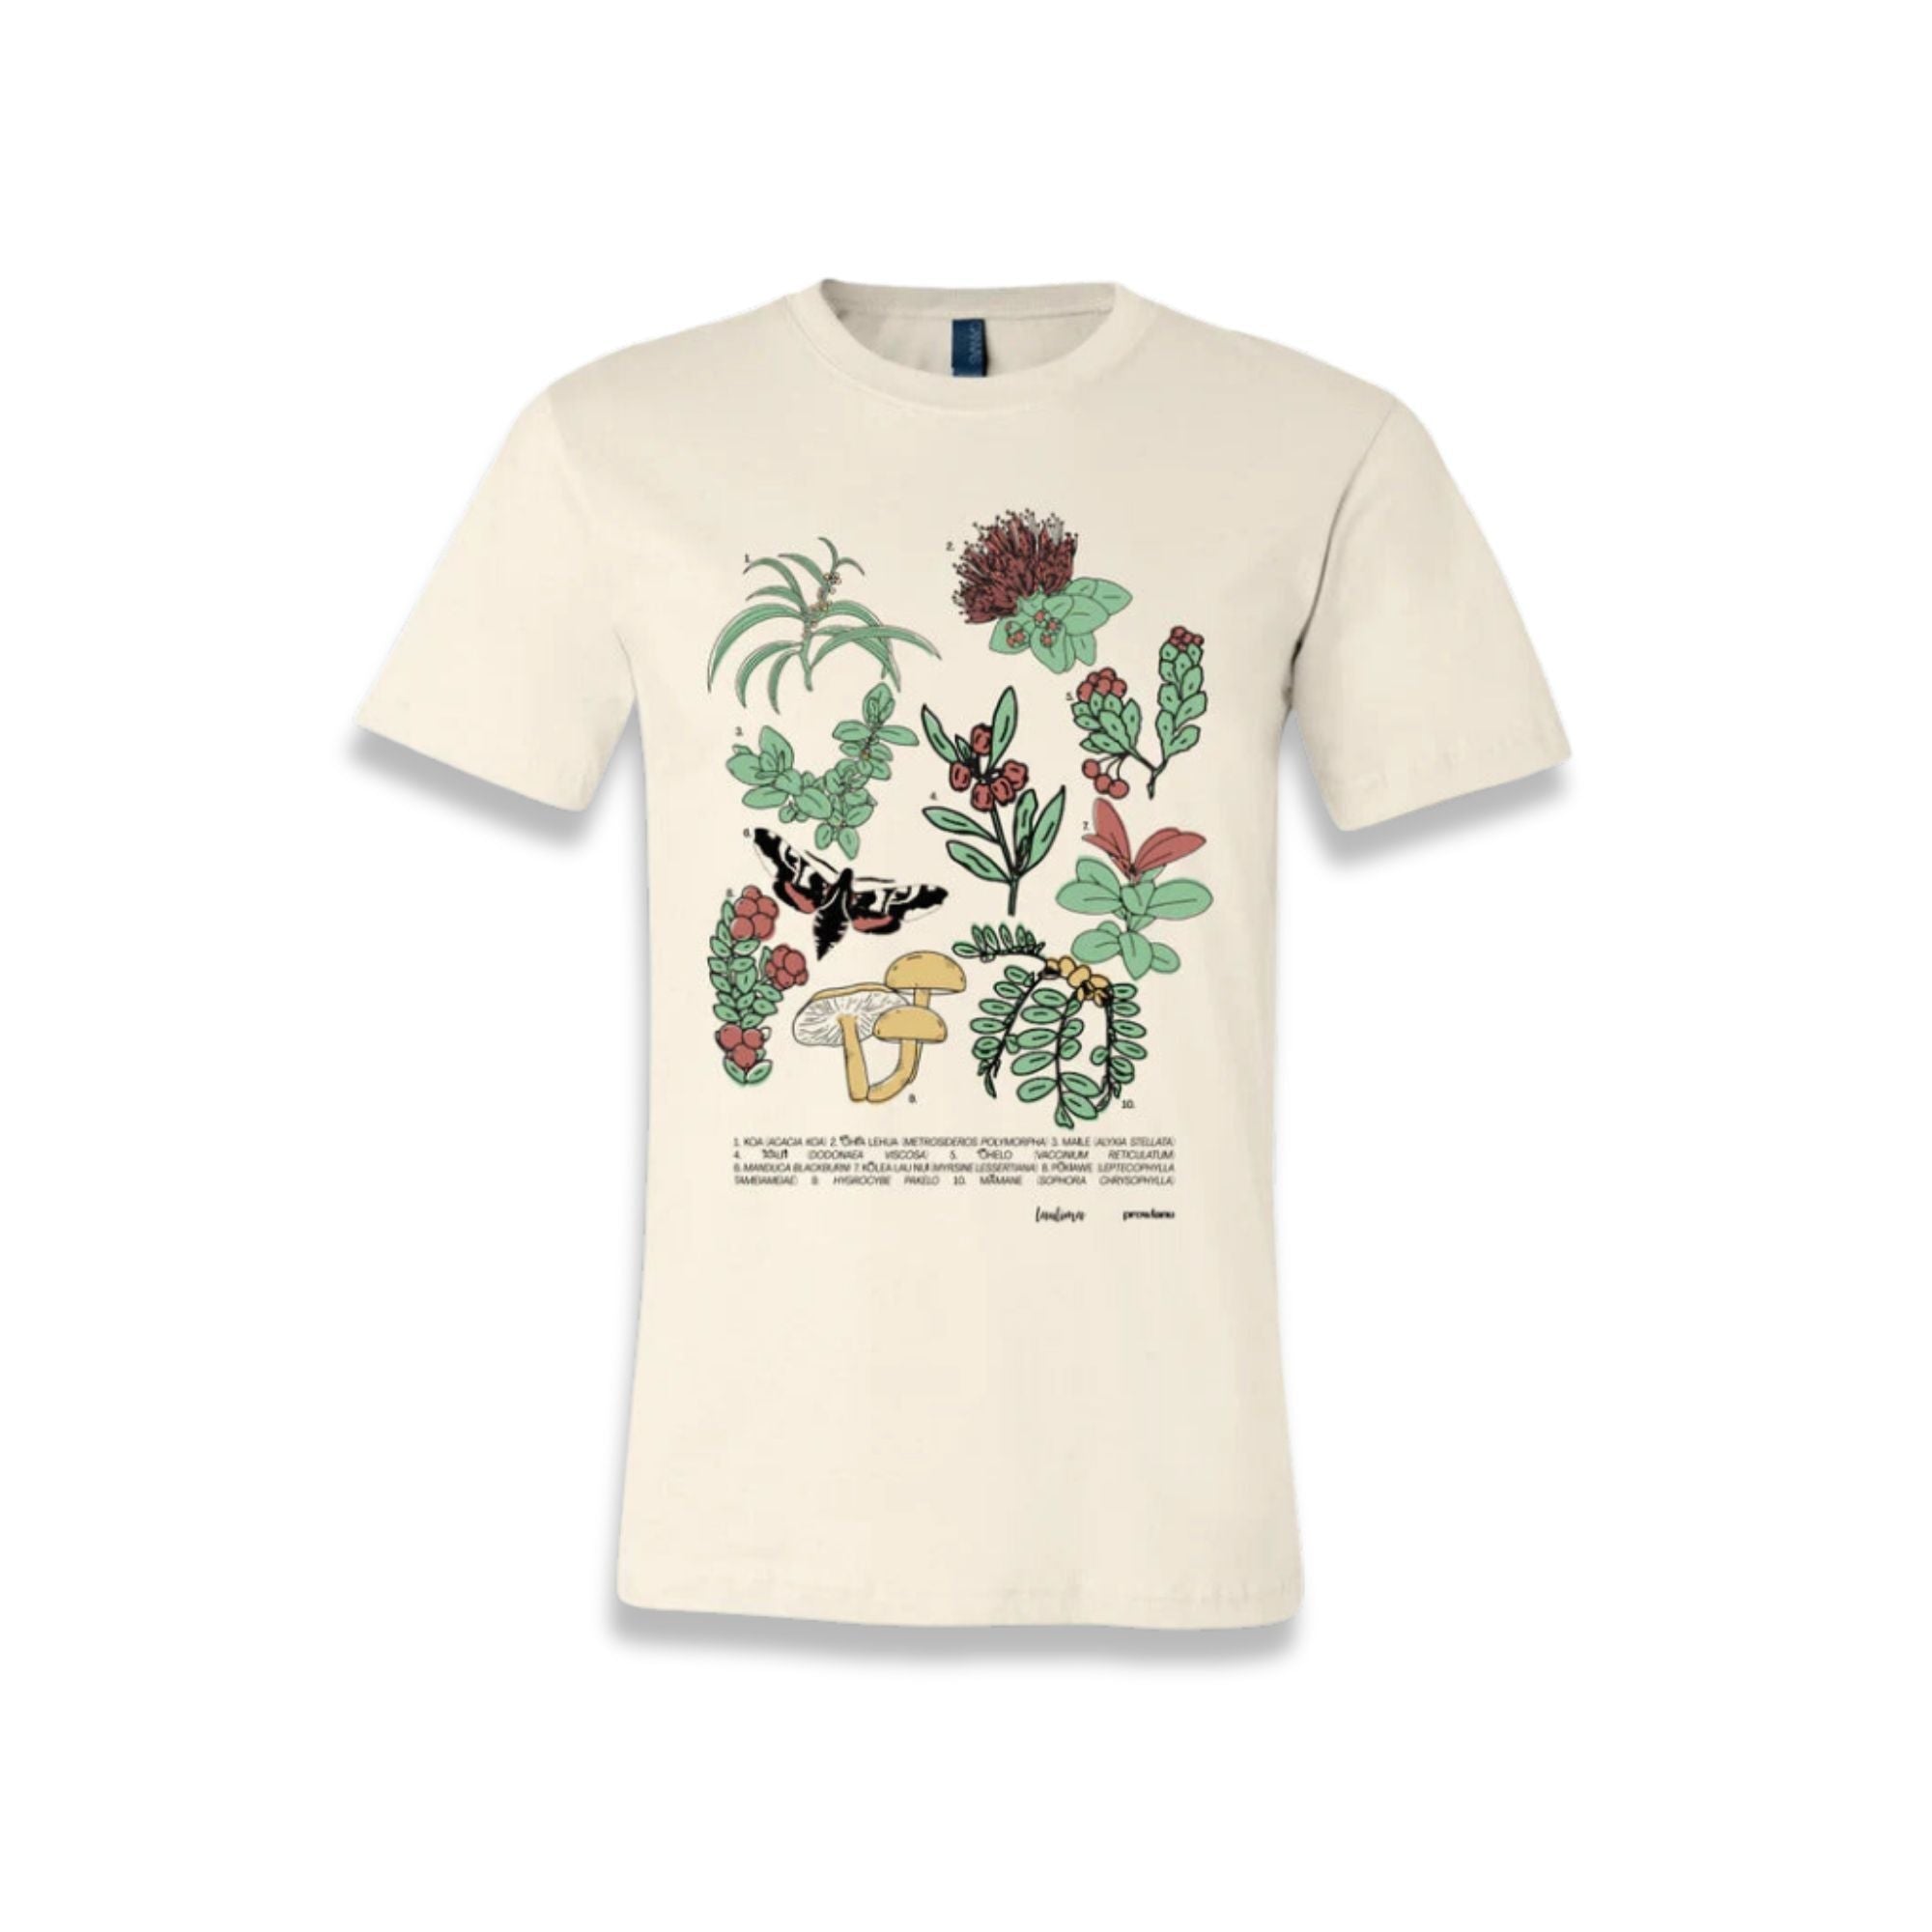 Pop-Up Mākeke - Laulima Hawai'i - Mauka Unisex Short Sleeve T-Shirt - Front View